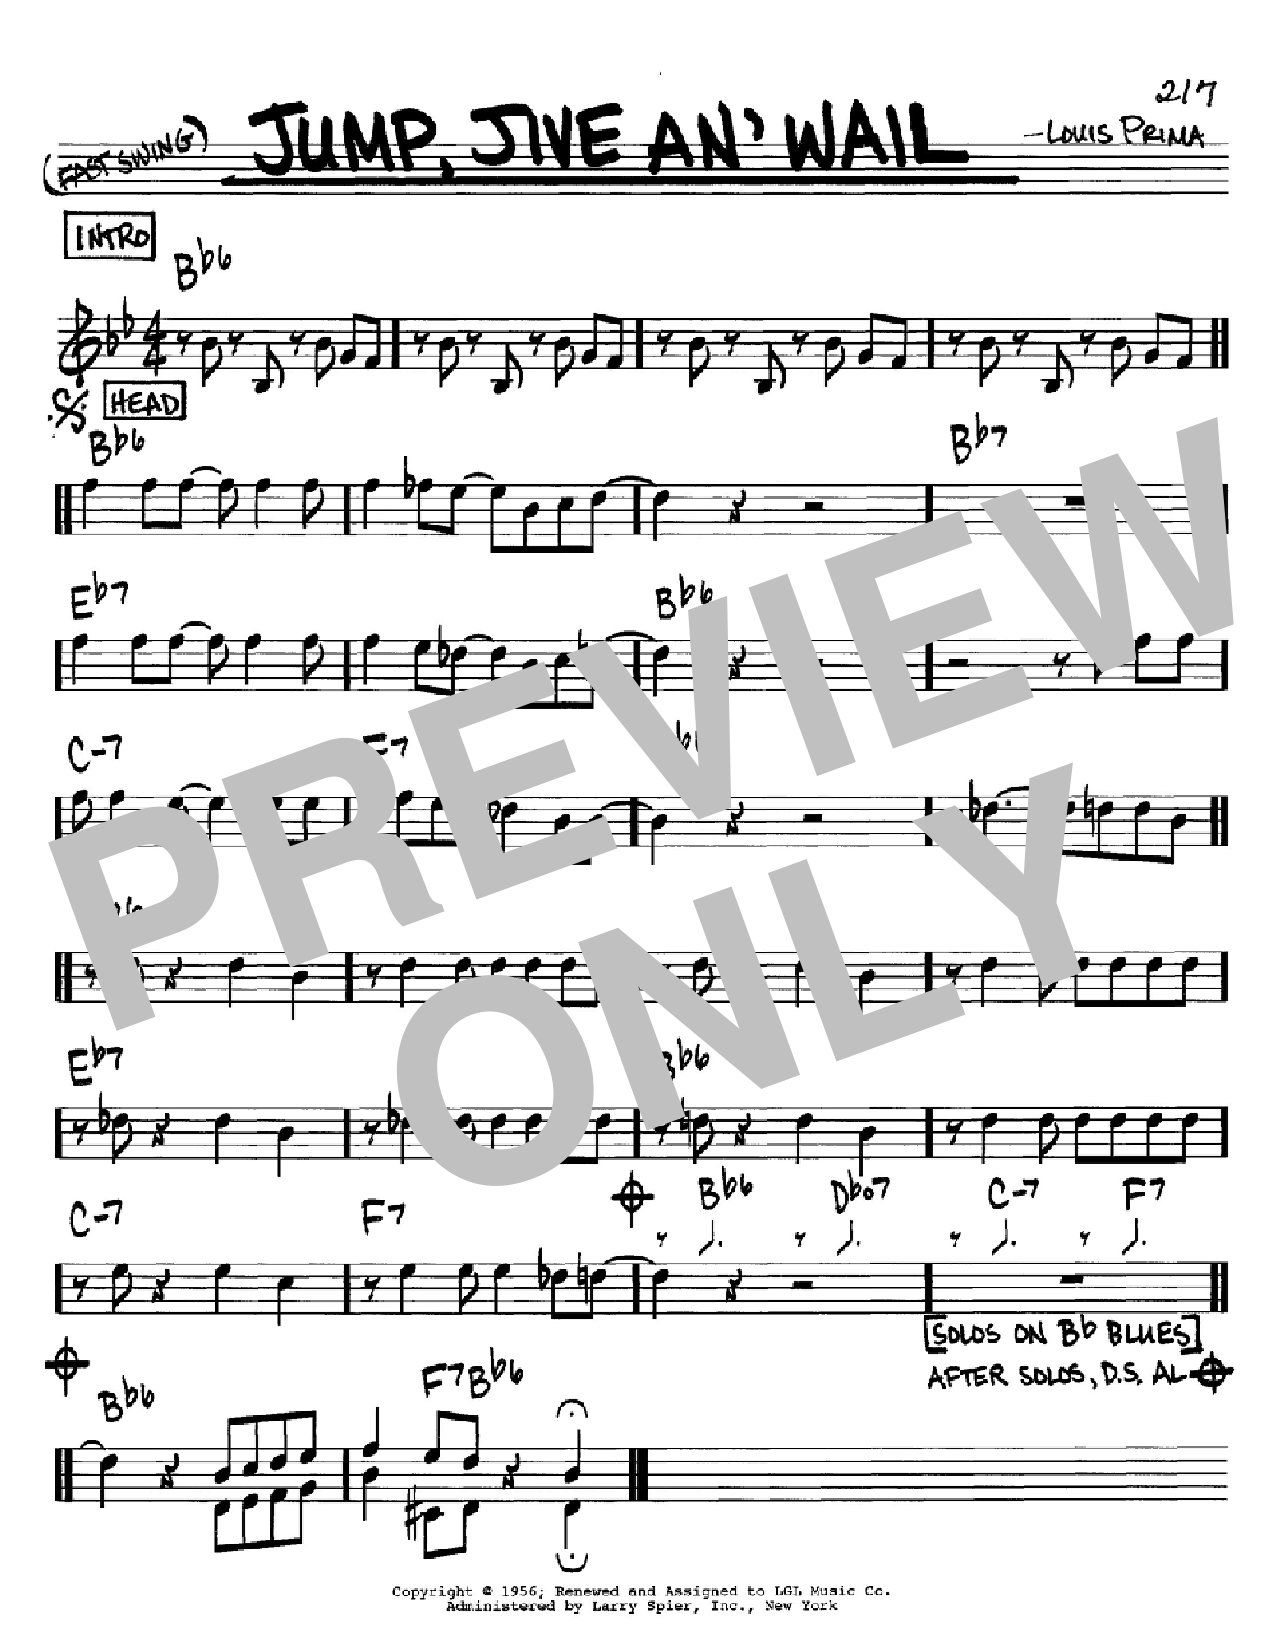 Louis Prima Jump, Jive An' Wail Sheet Music Notes & Chords for Trumpet - Download or Print PDF